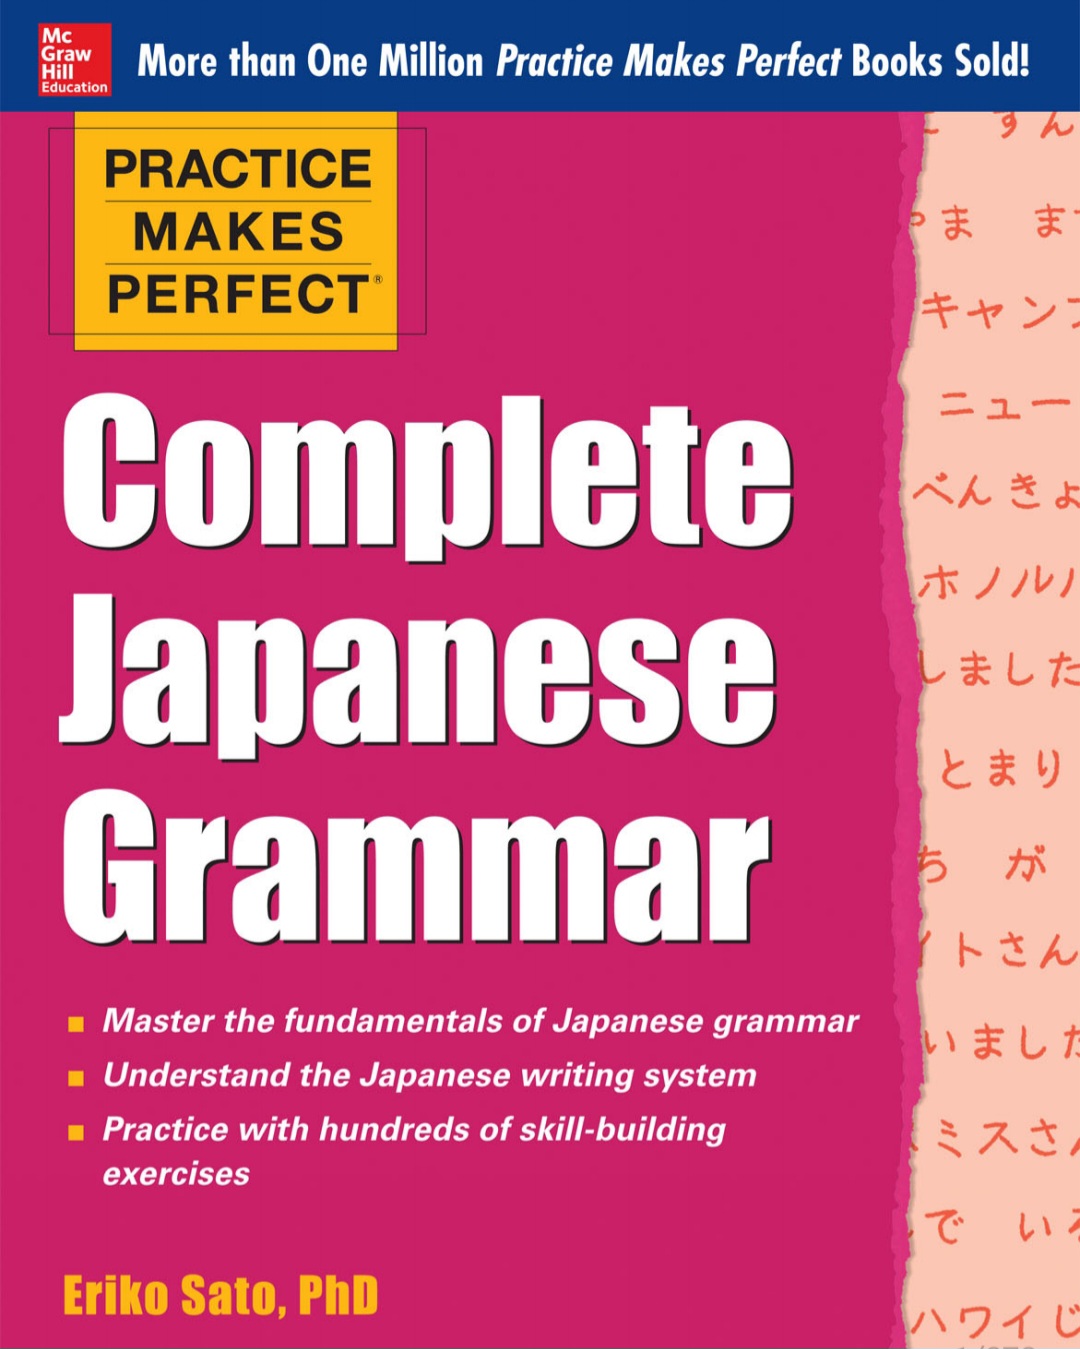 Practice Makes Perfect: Complete Japanese Grammar&nbsp; - PDF